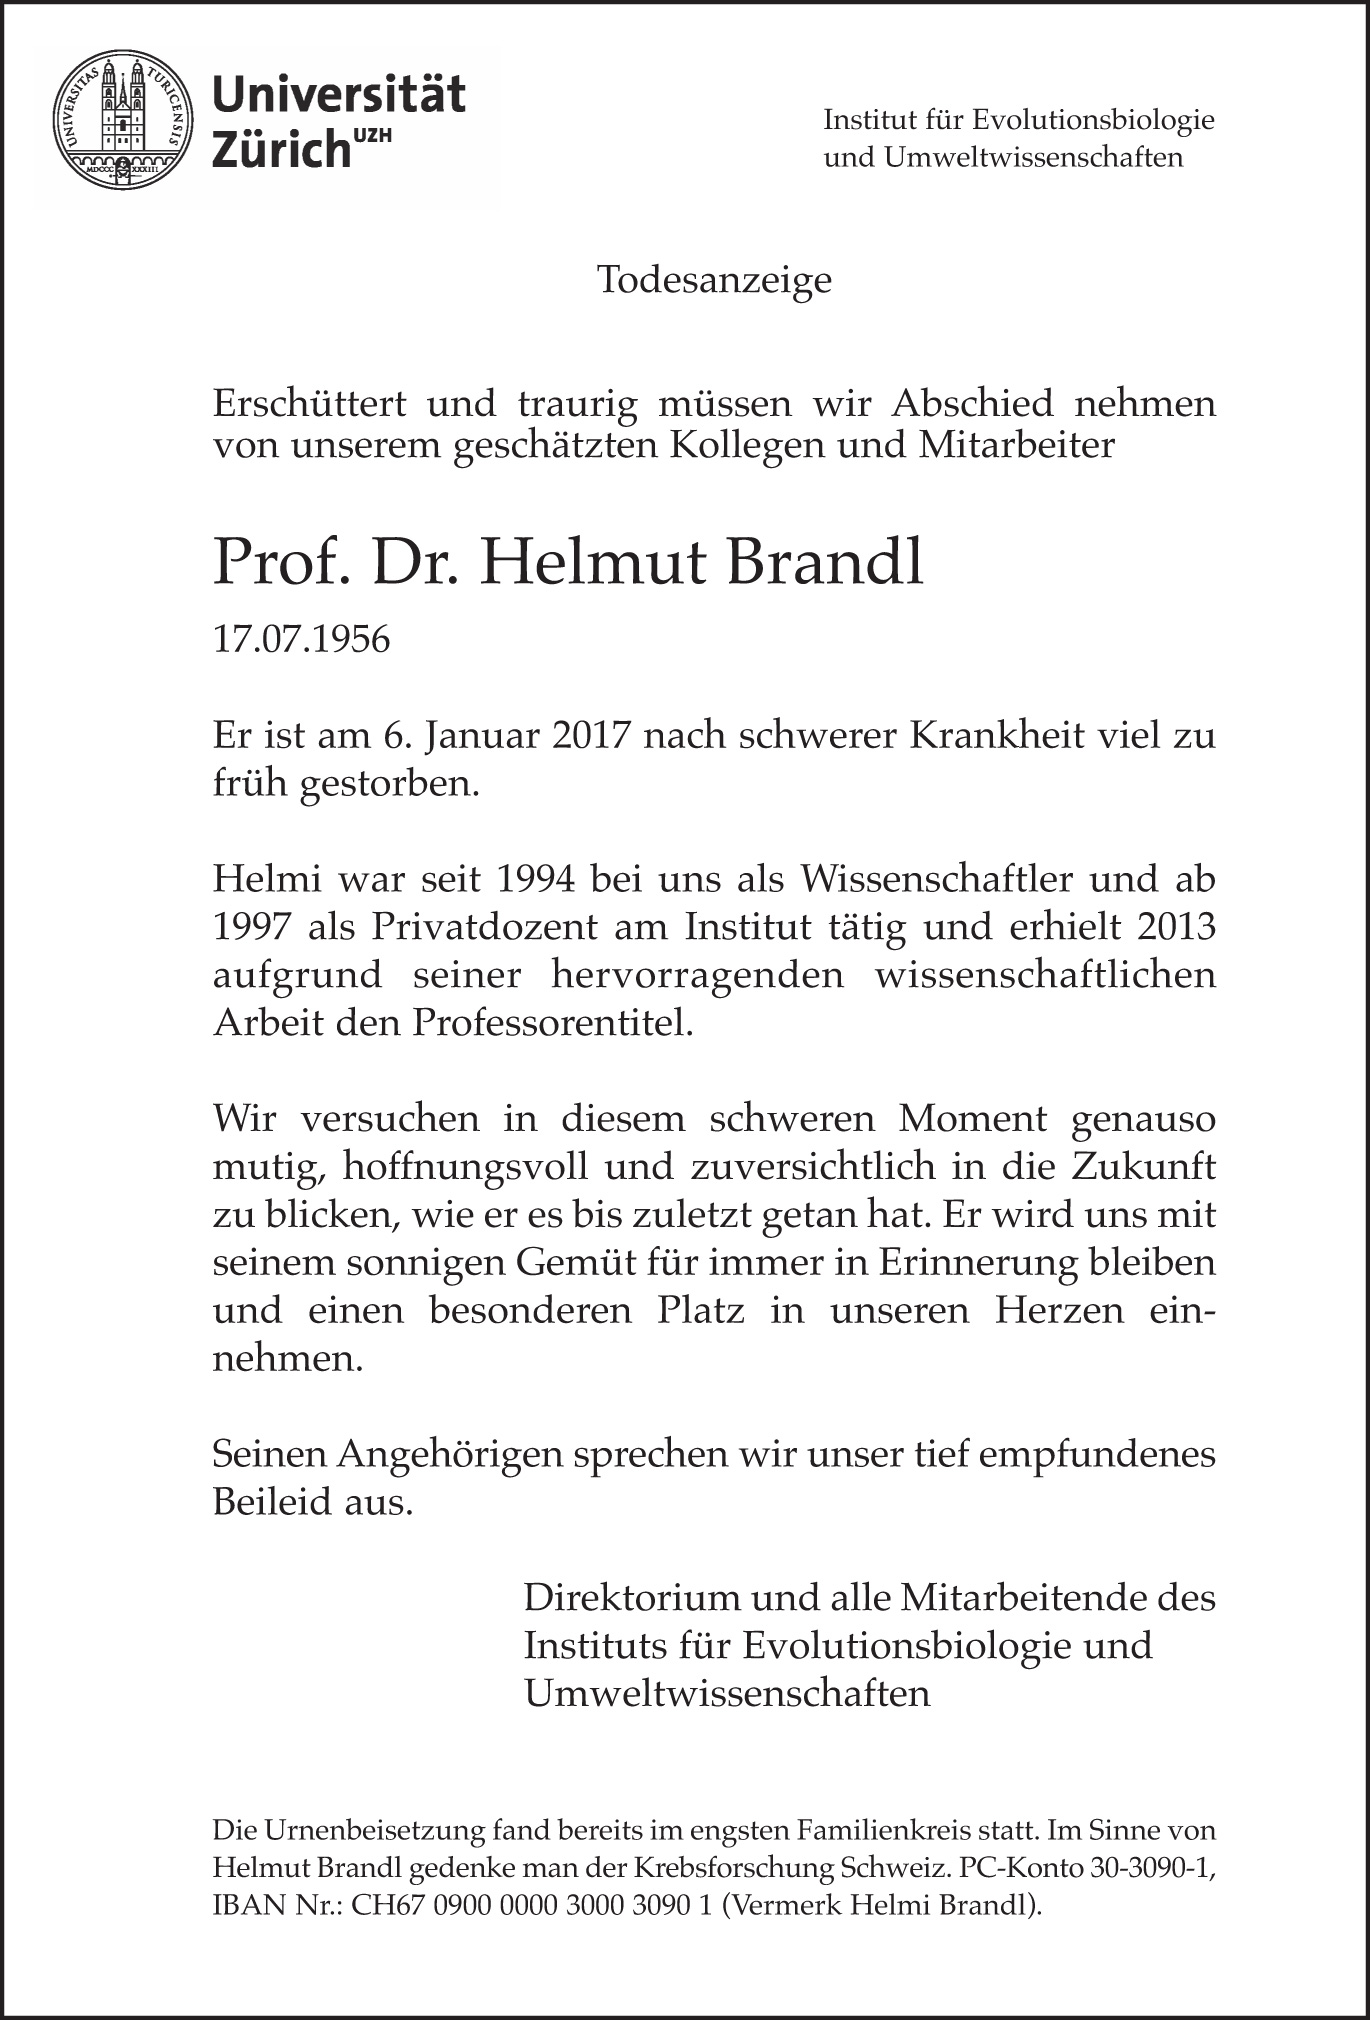 Prof. Dr. Helmut Brandl